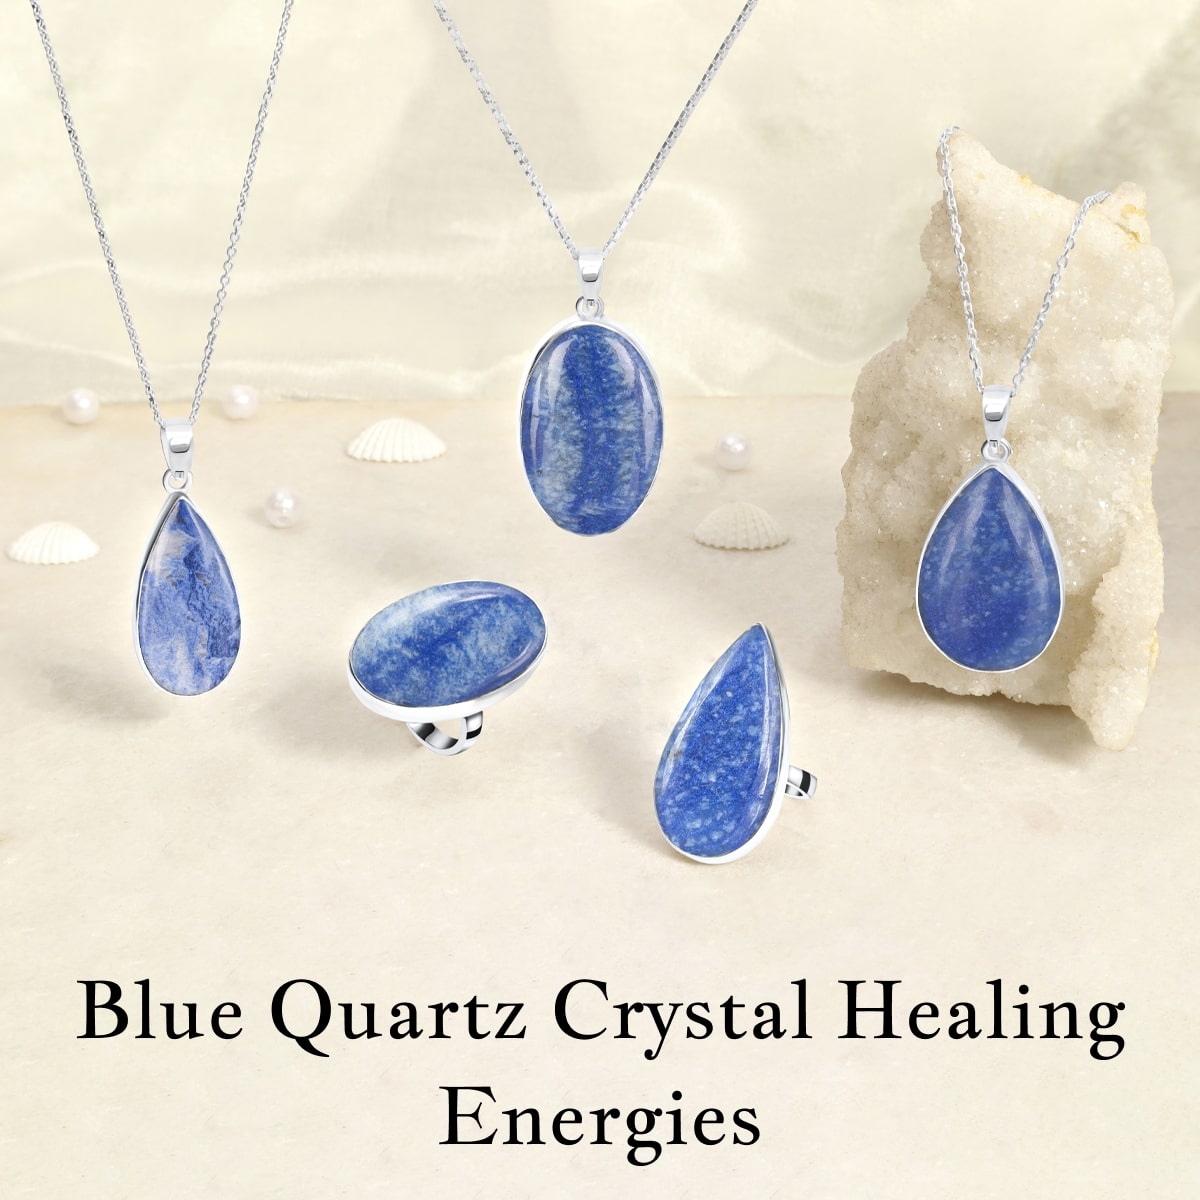 Healing Properties of Blue Quartz Crystal